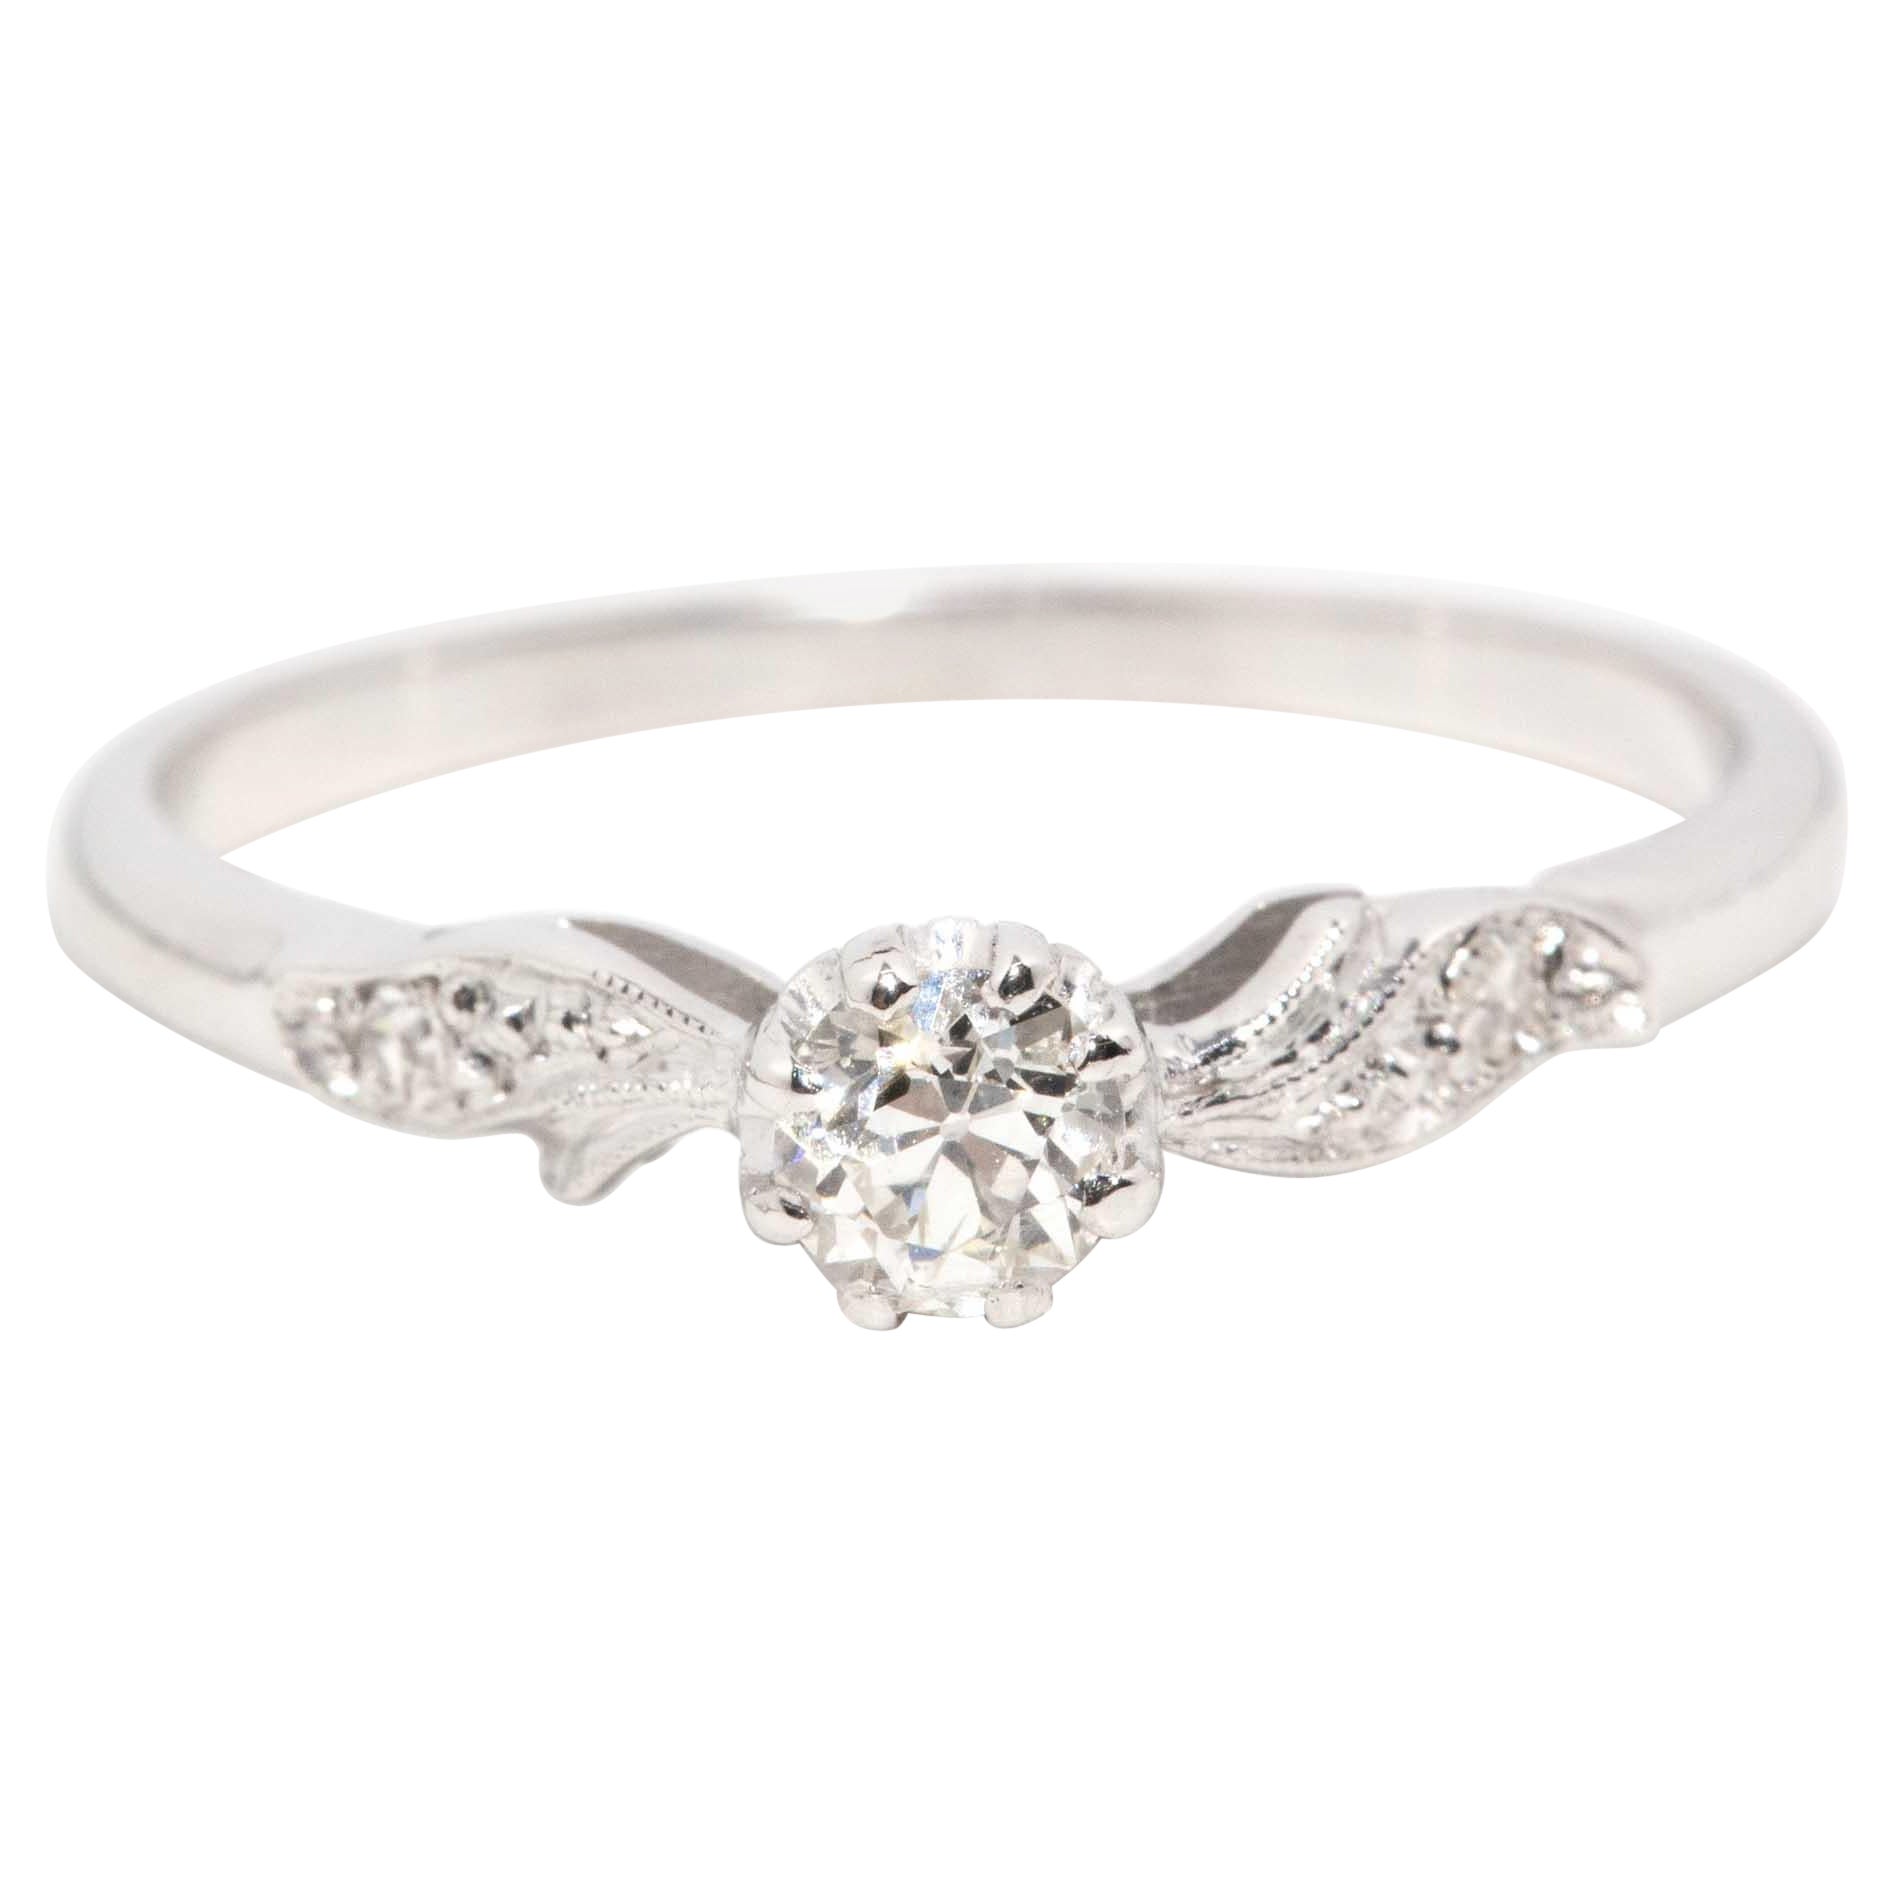 Vintage Circa 1950s Old Cut Diamond Engagement Ring 18 Carat White Gold